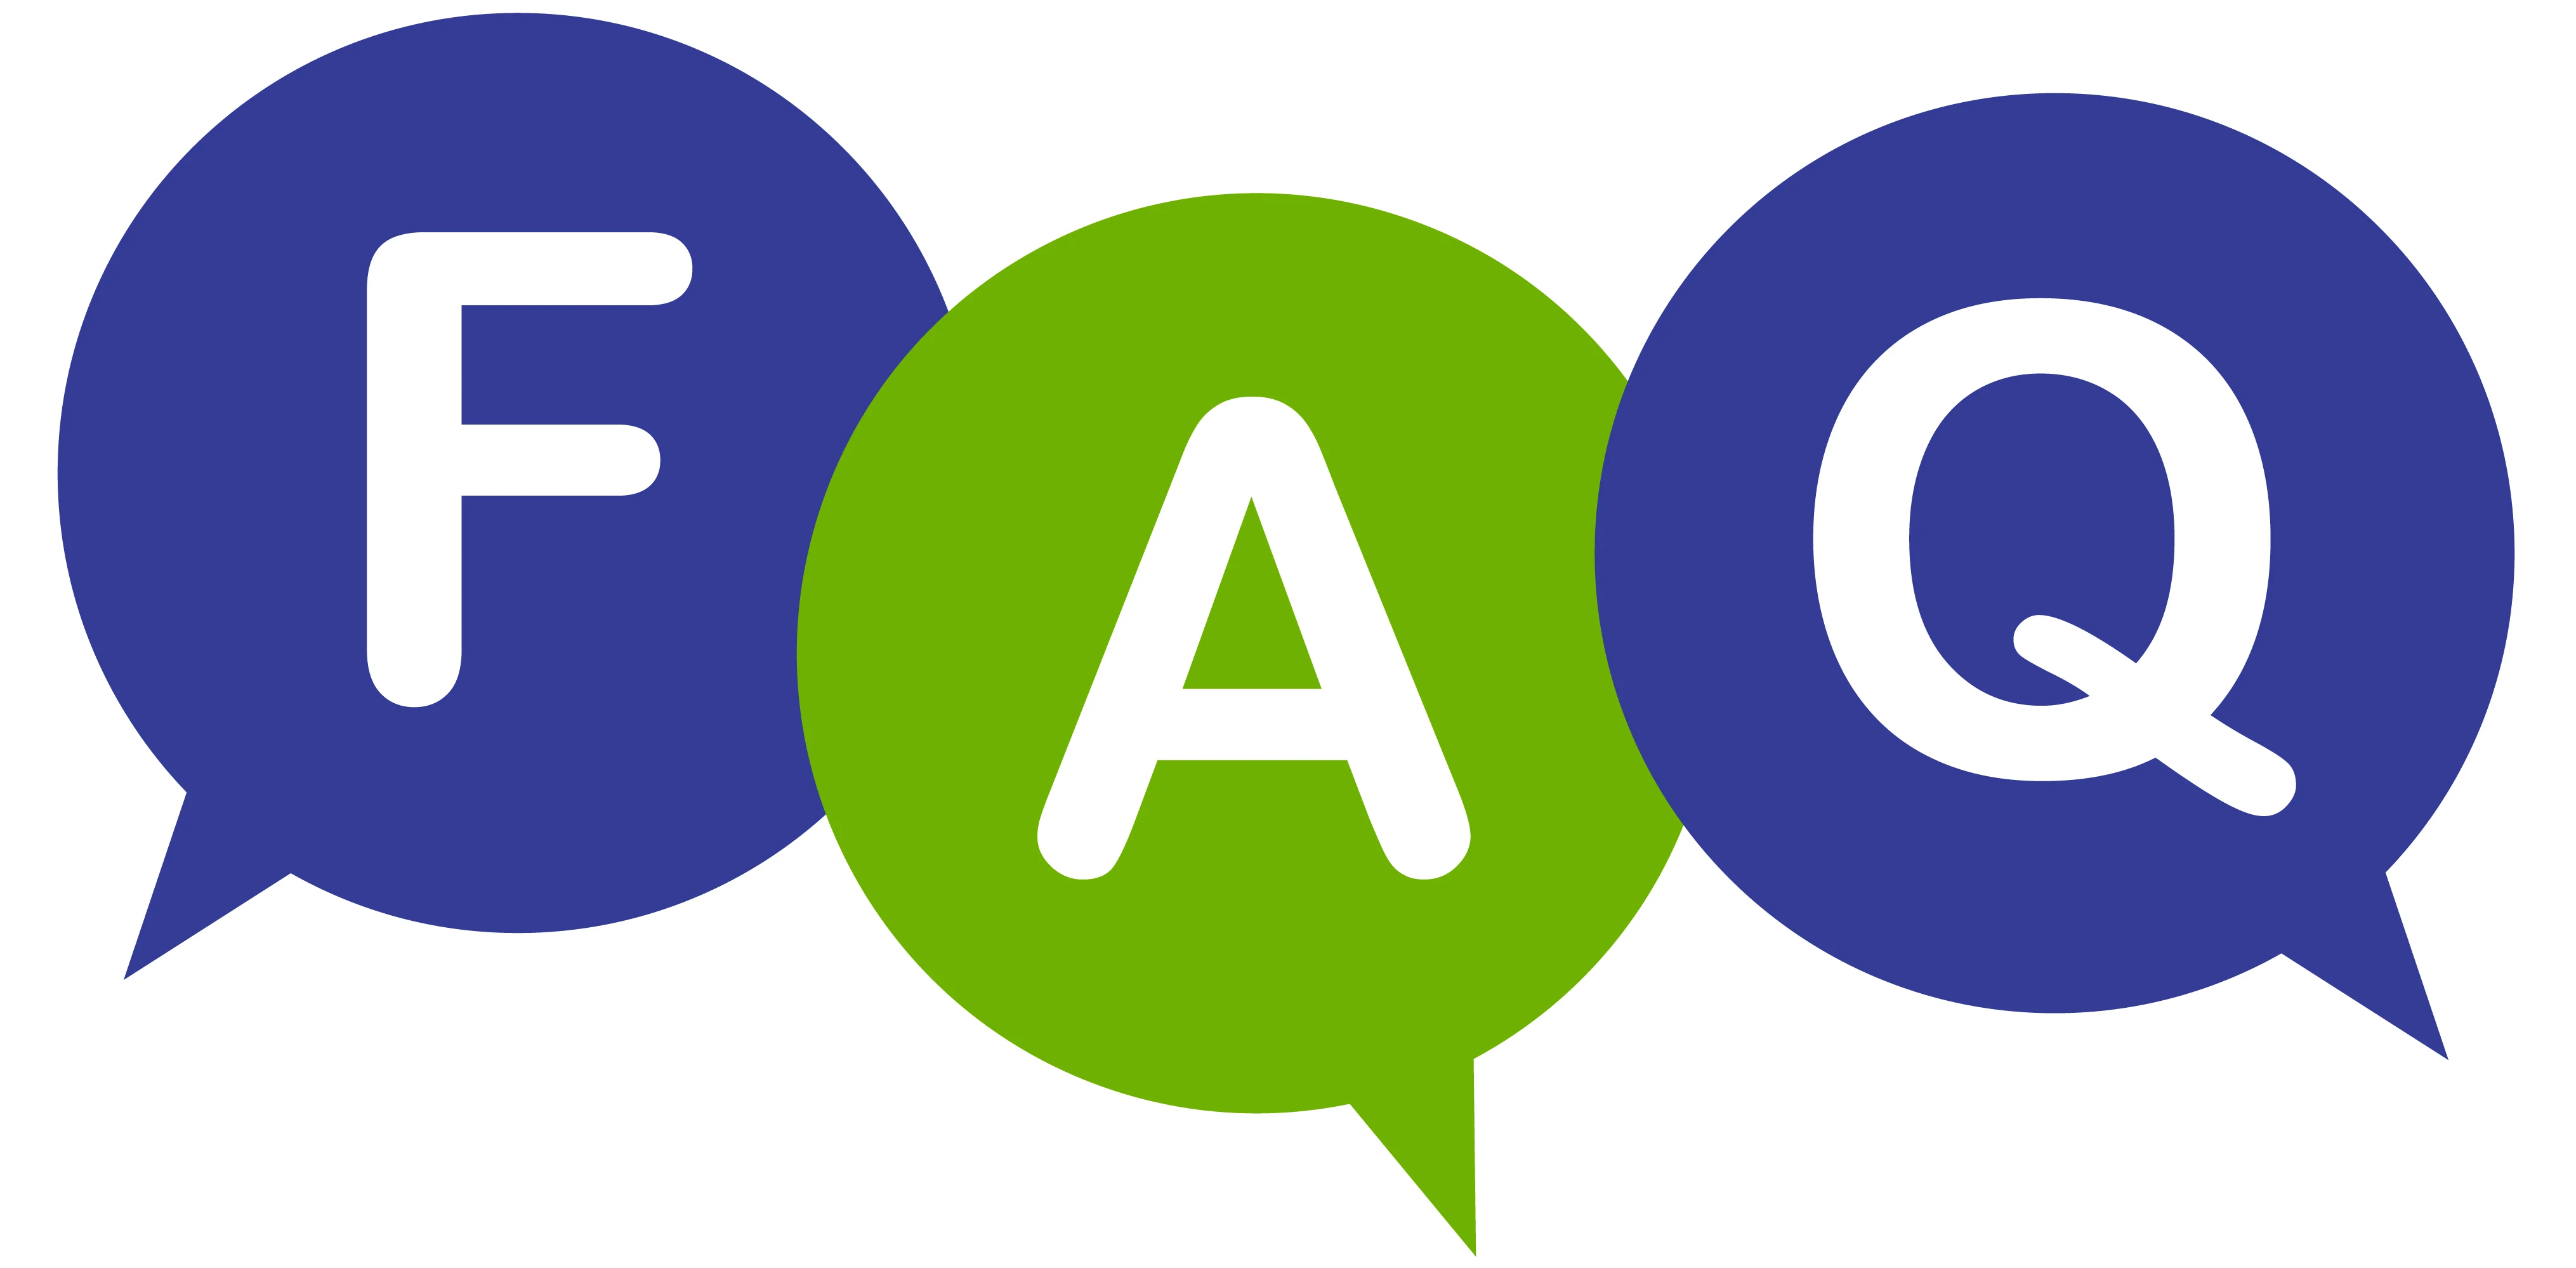 Frequently перевод. FAQ. FAQ картинка. Значок FAQ. FAQ продукция.